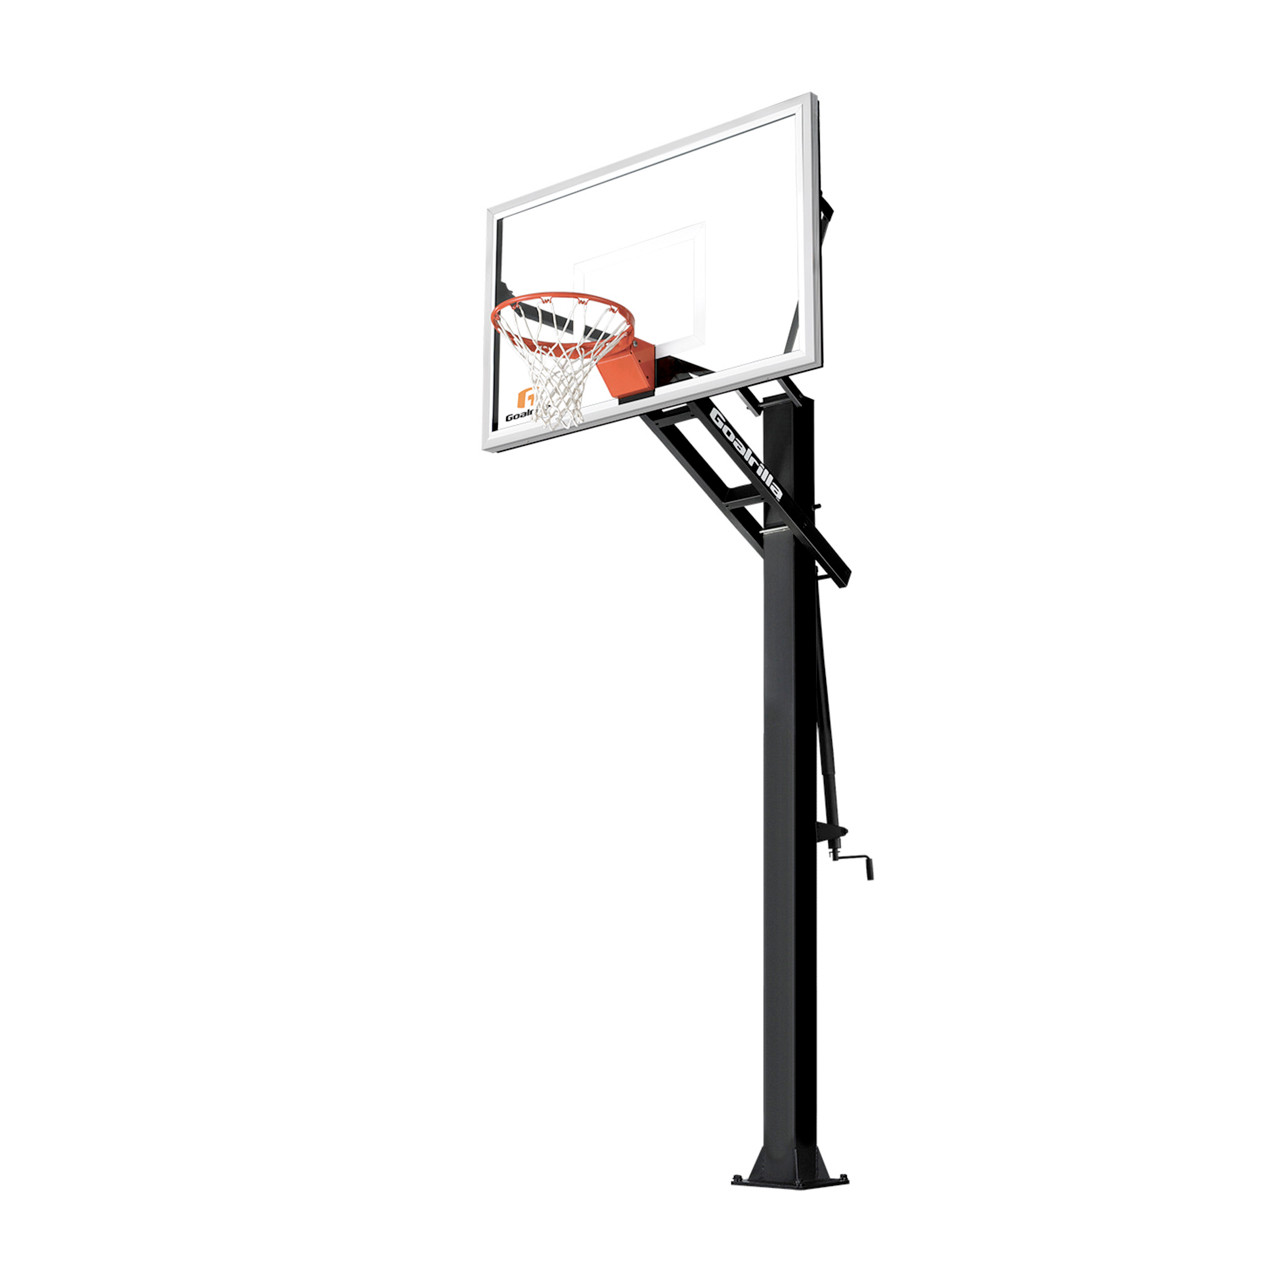 Mini Basketball Hoop For Trampoline With Enclosure Universal Basketball  Rack